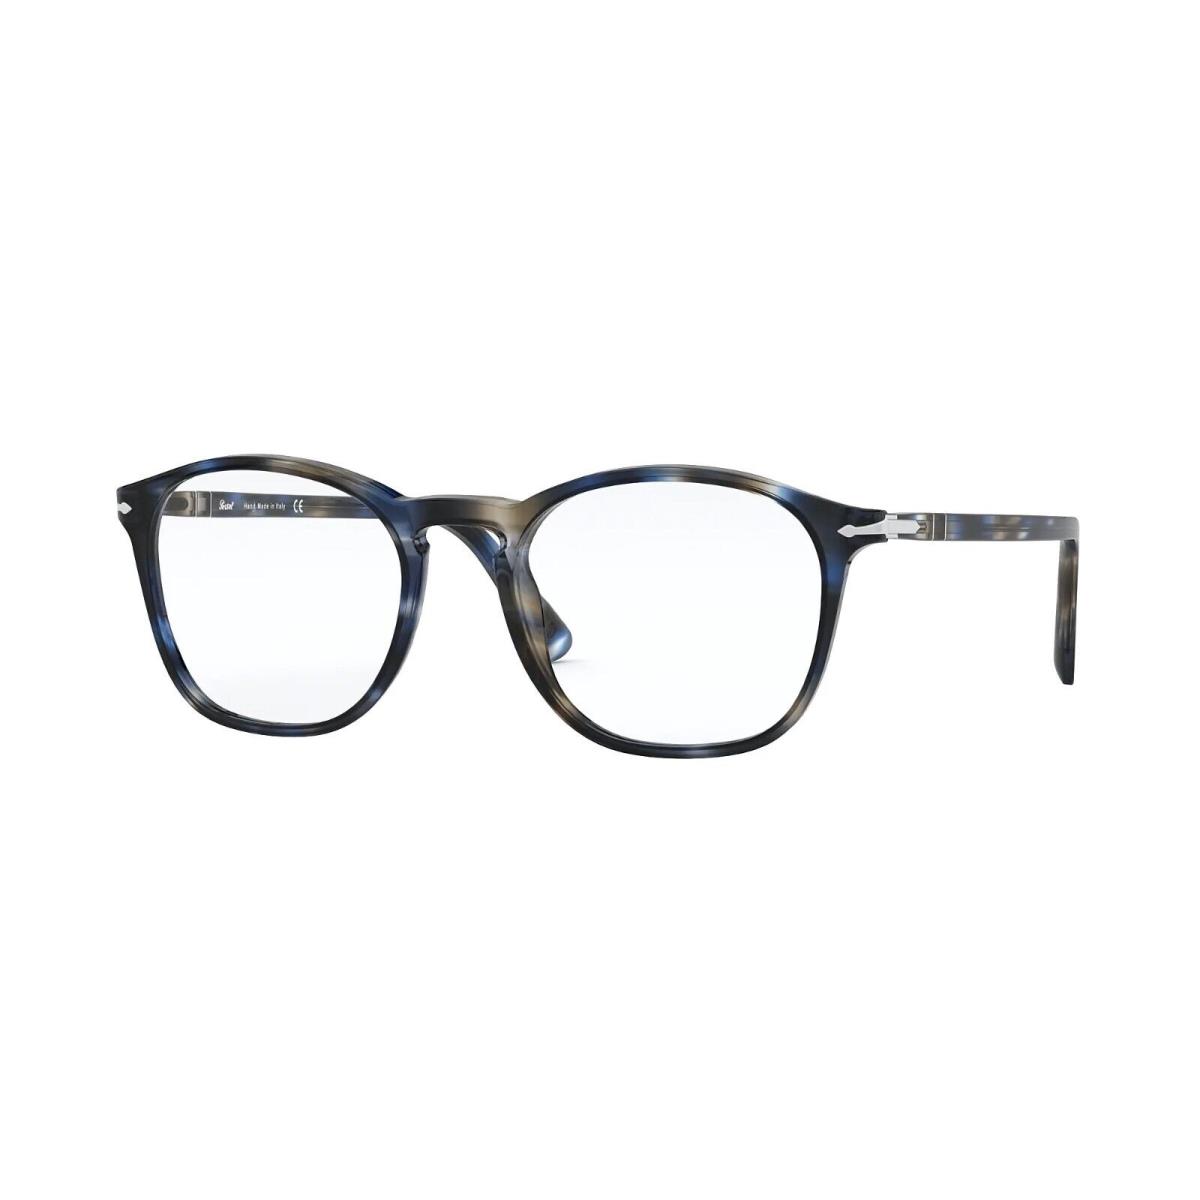 Persol Eyeglasses Men`s PO3007VM 1126 Blue Striped Grey 50mm - Frame: Blue